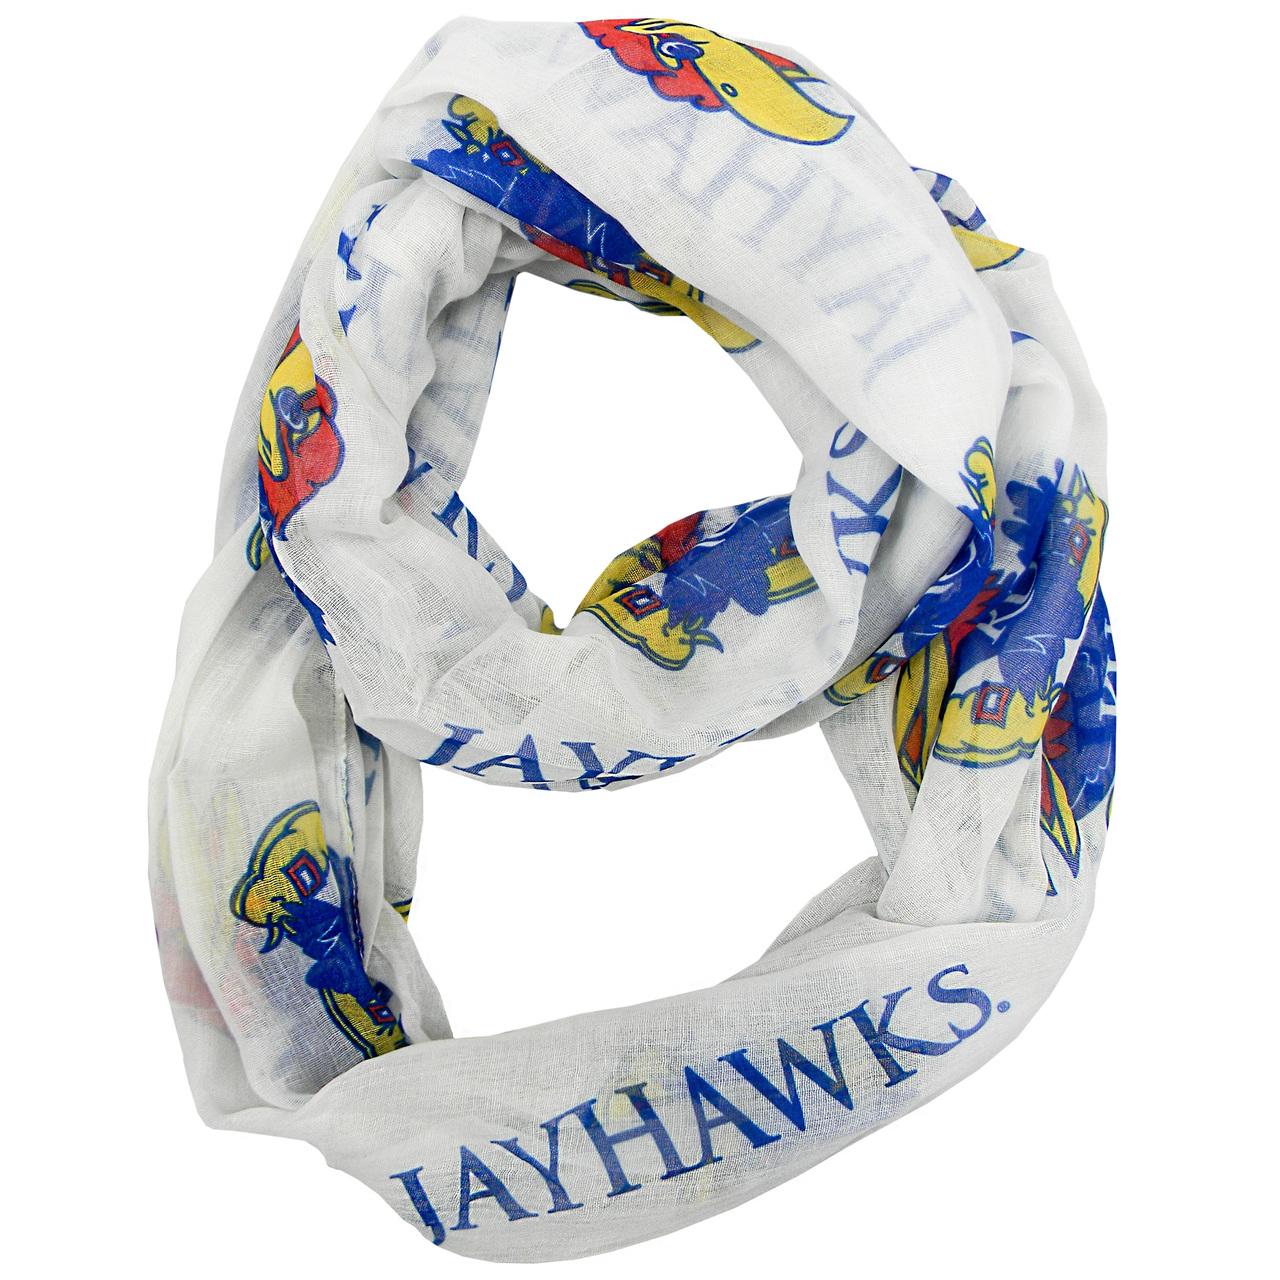 Kansas Jayhawks Infinity Scarf - Alternate